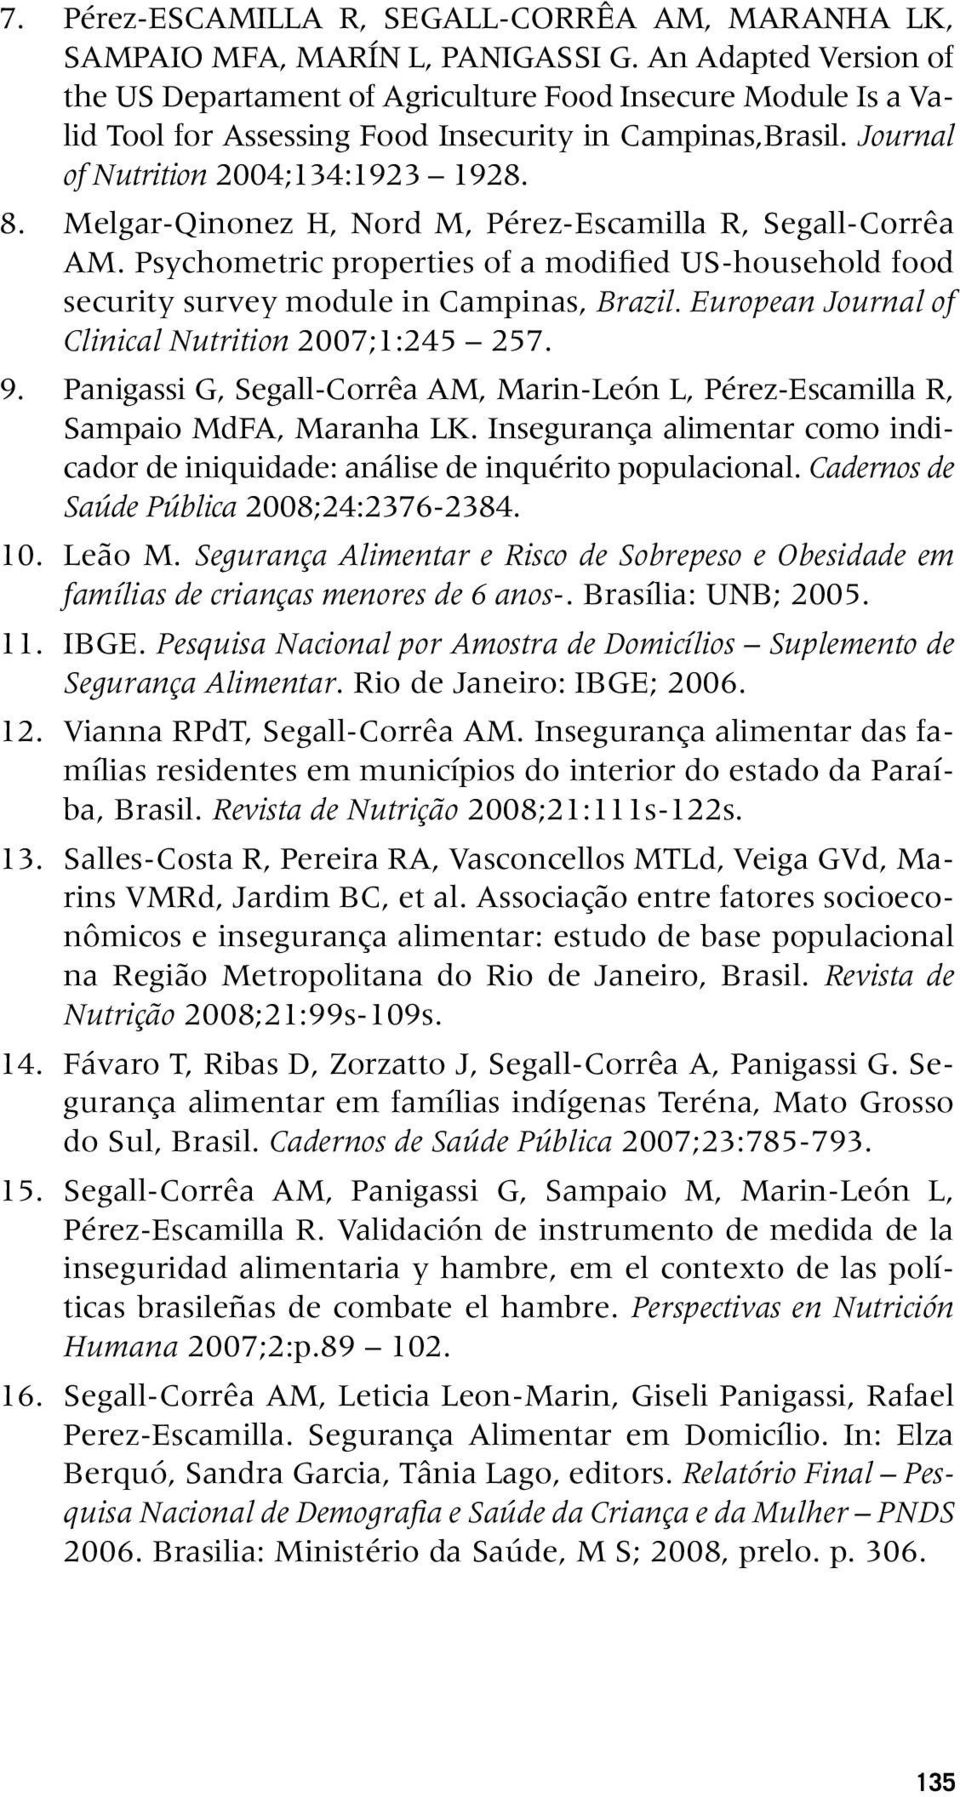 Melgar-Qinonez H, Nord M, Pérez-Escamilla R, Segall-Corrêa AM. Psychometric properties of a modified US-household food security survey module in Campinas, Brazil.